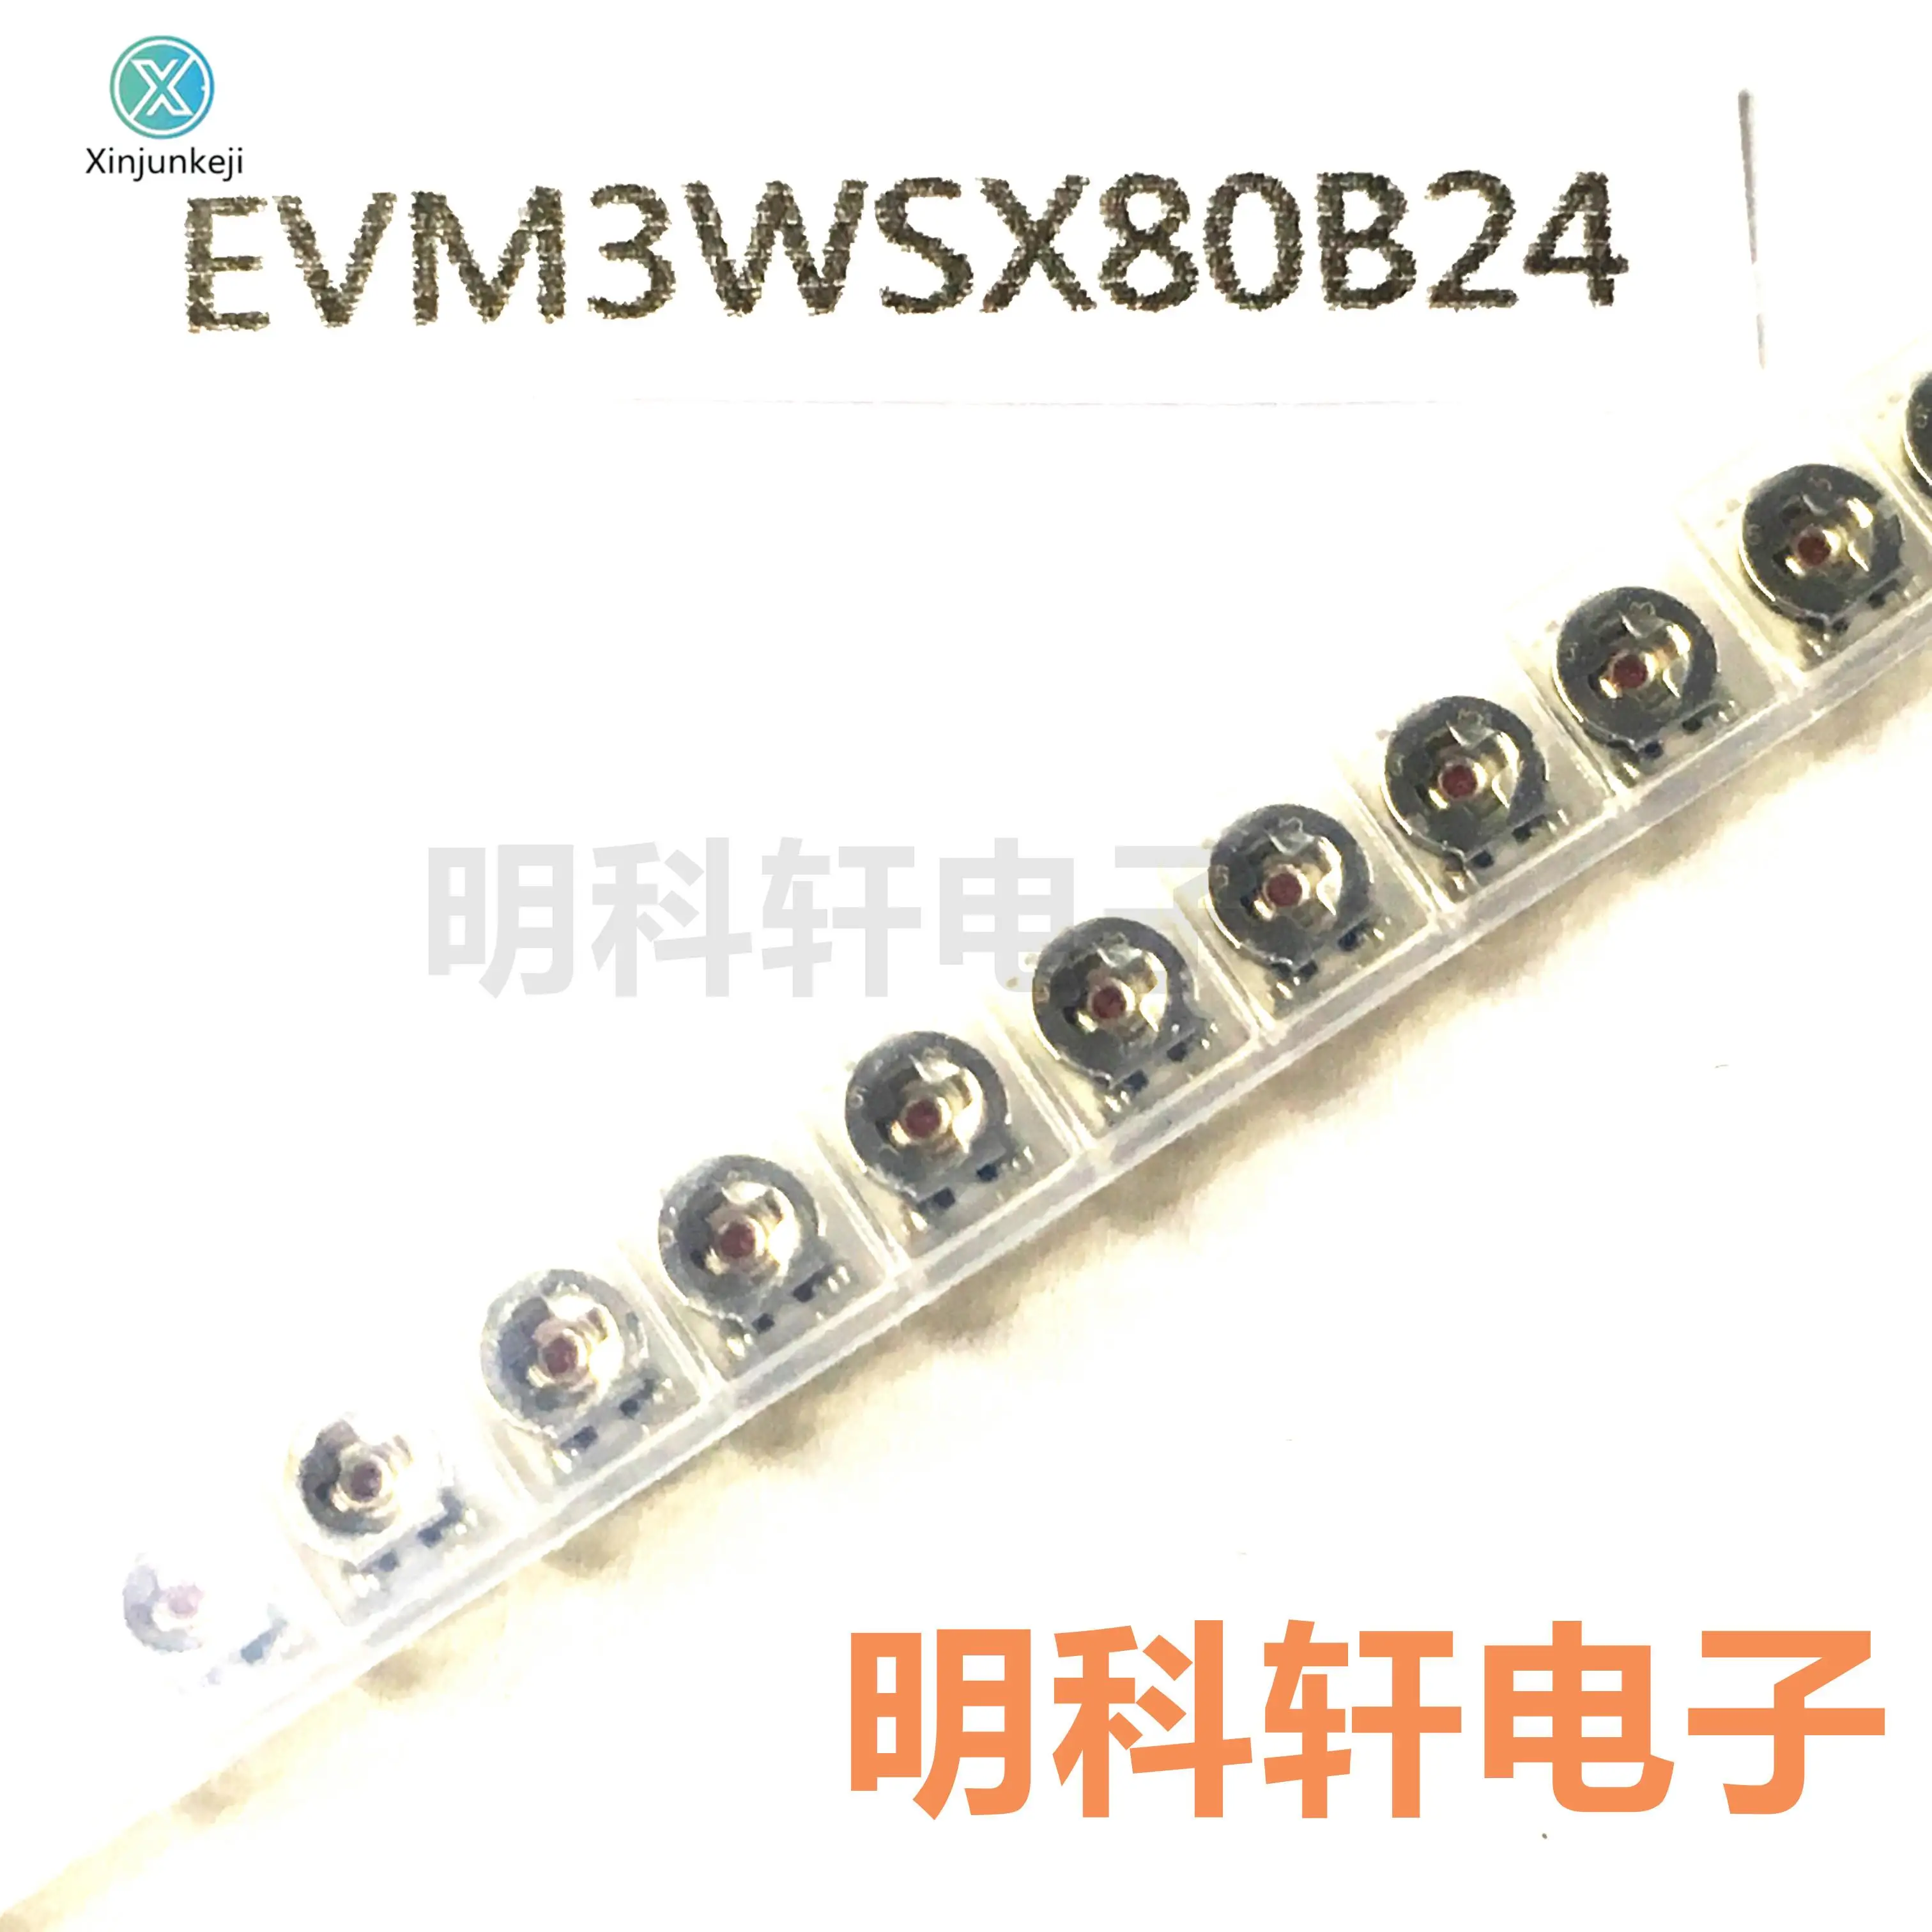 

20pcs orginal new EVM3WSX80B24 SMD adjustable resistor potentiometer 20K